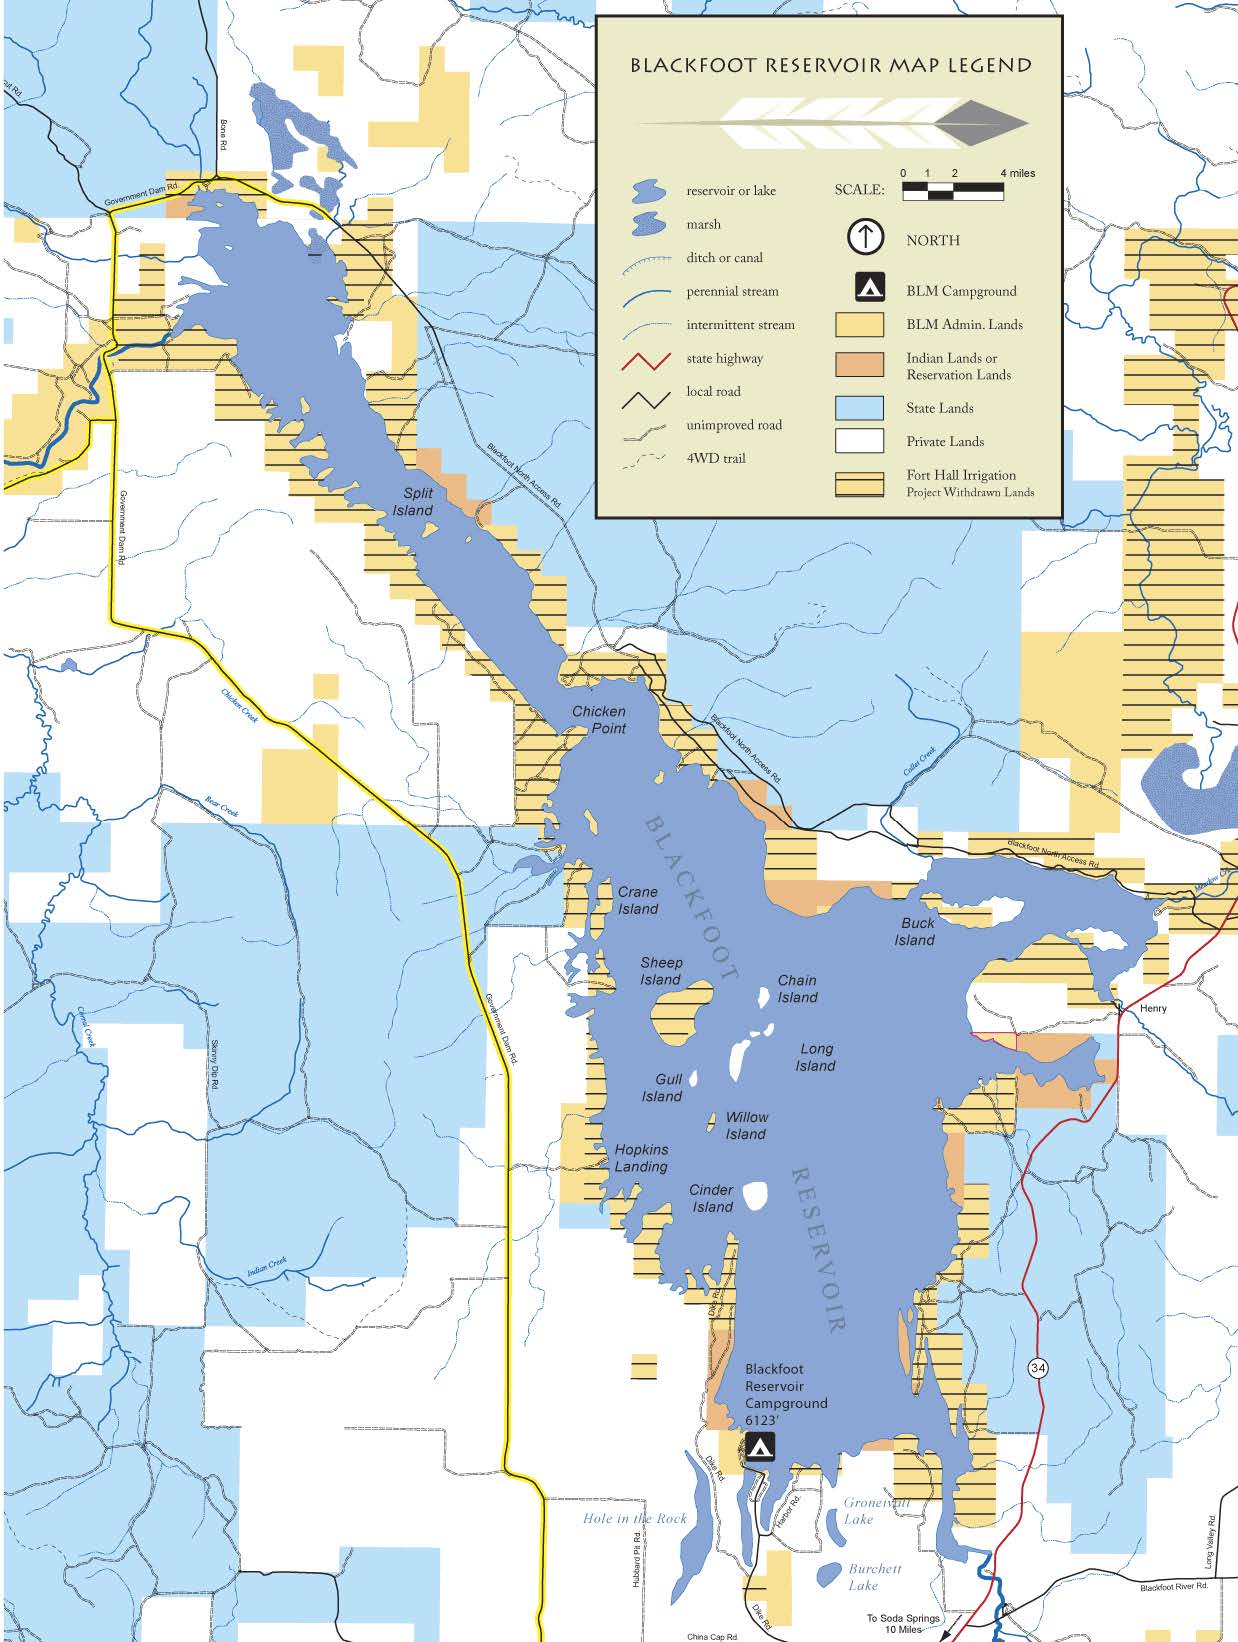 Public Room Media Center Idaho Blackfoot River Recreation Map Bureau Of Land Management 3065